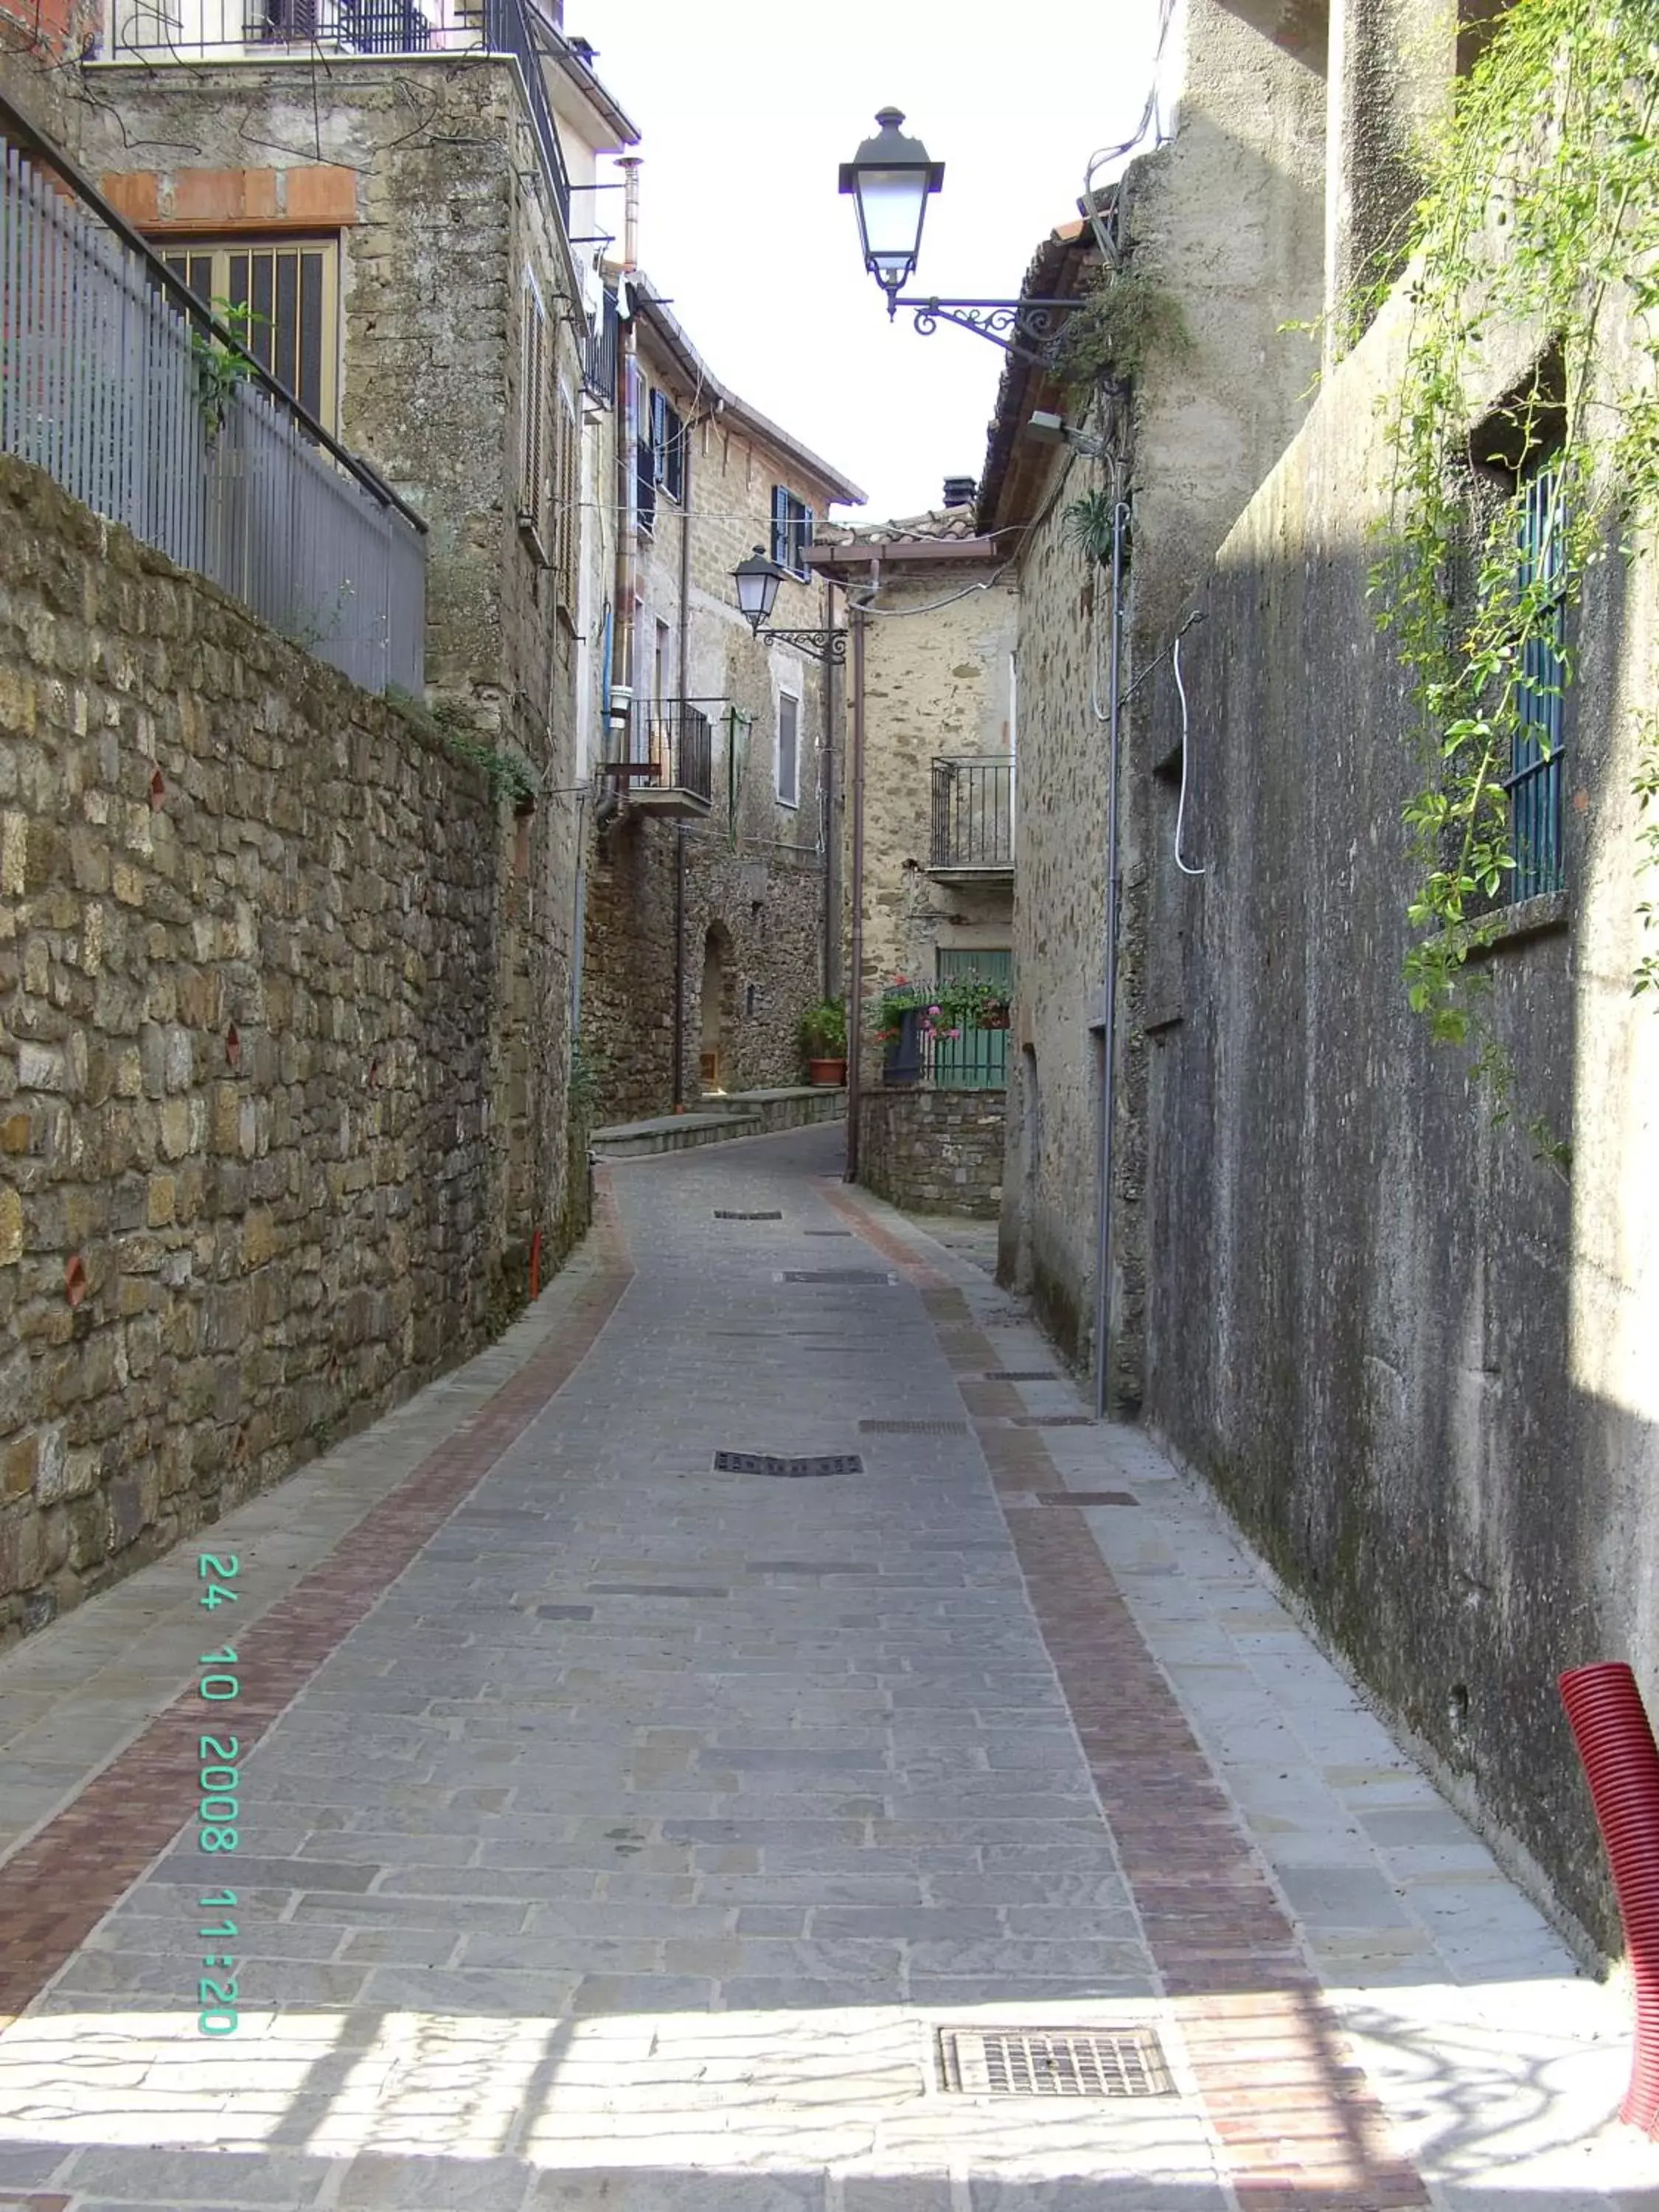 Area and facilities in Cilento